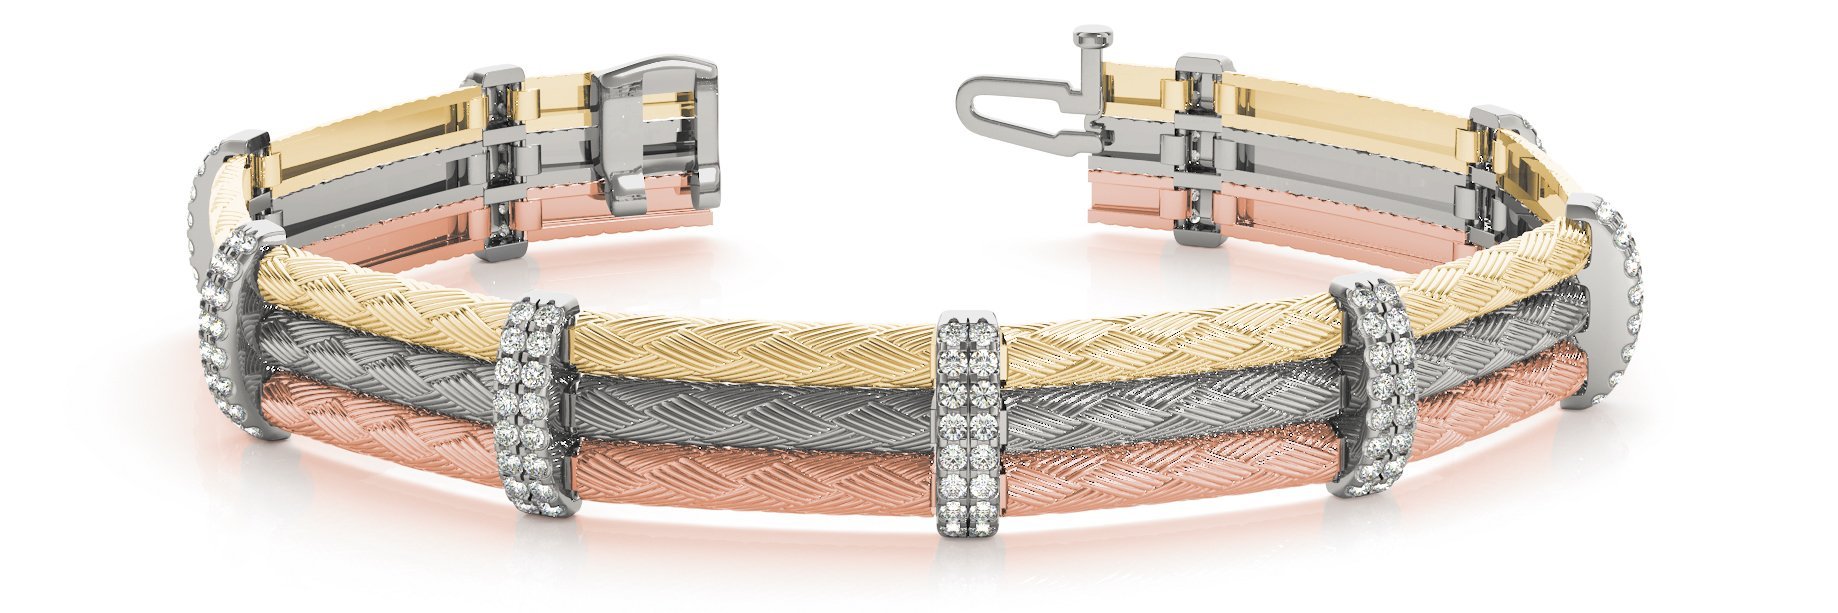 Fancy Diamond Bracelet Ladies 1.71ct tw - 14kt Gold